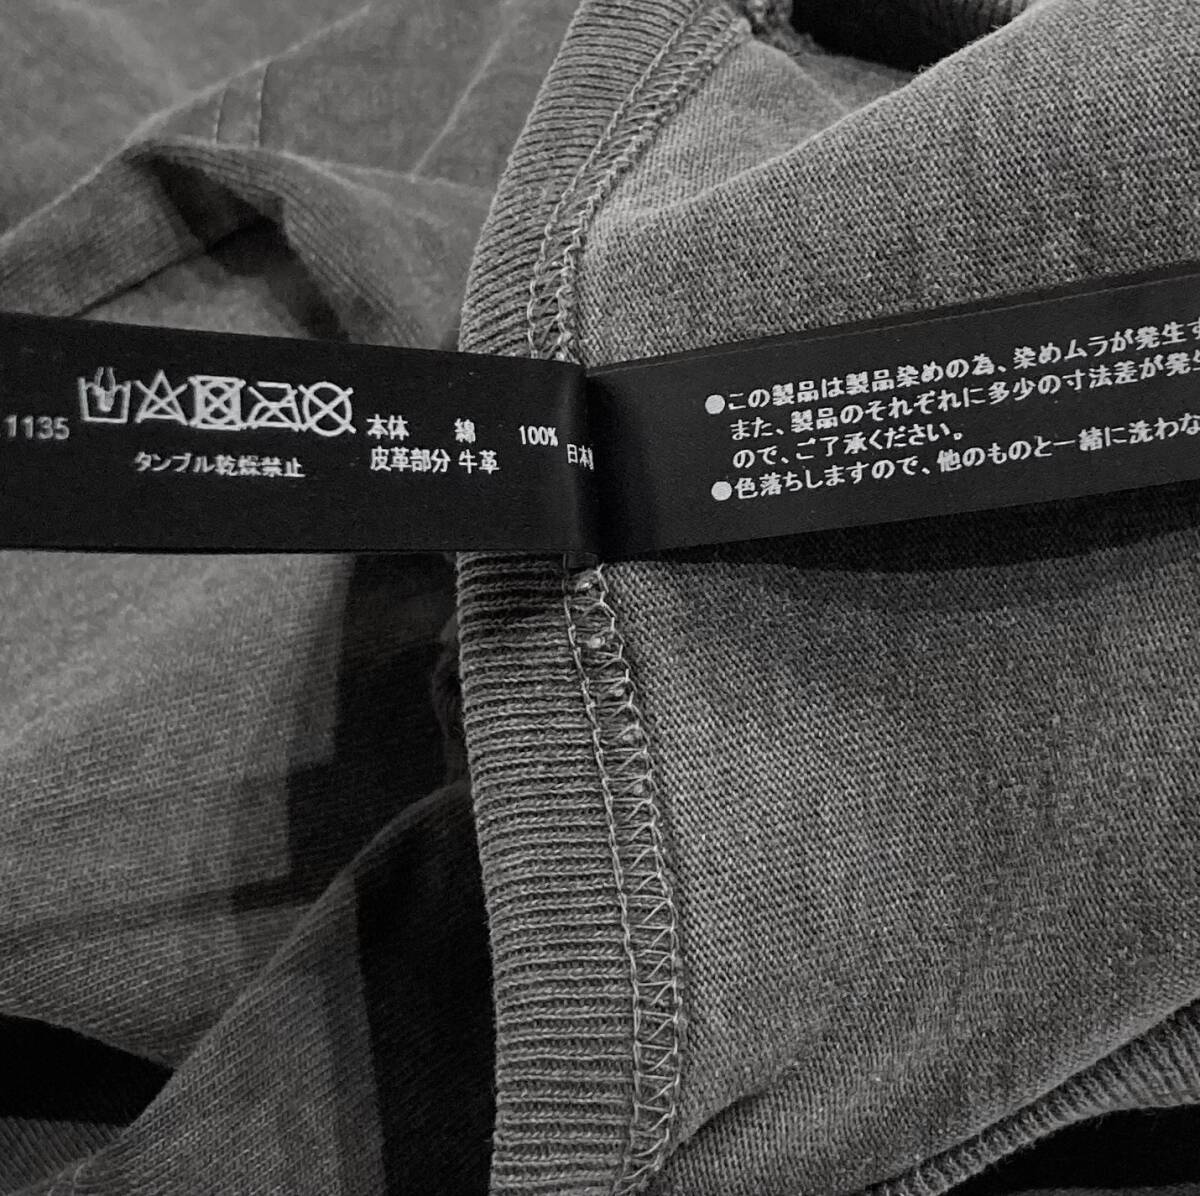 22SS один раз надеты 1.3 десять тысяч wjk leather pocket-T кожа карман футболка AKM Jun - si Moto 1piu1uguale3